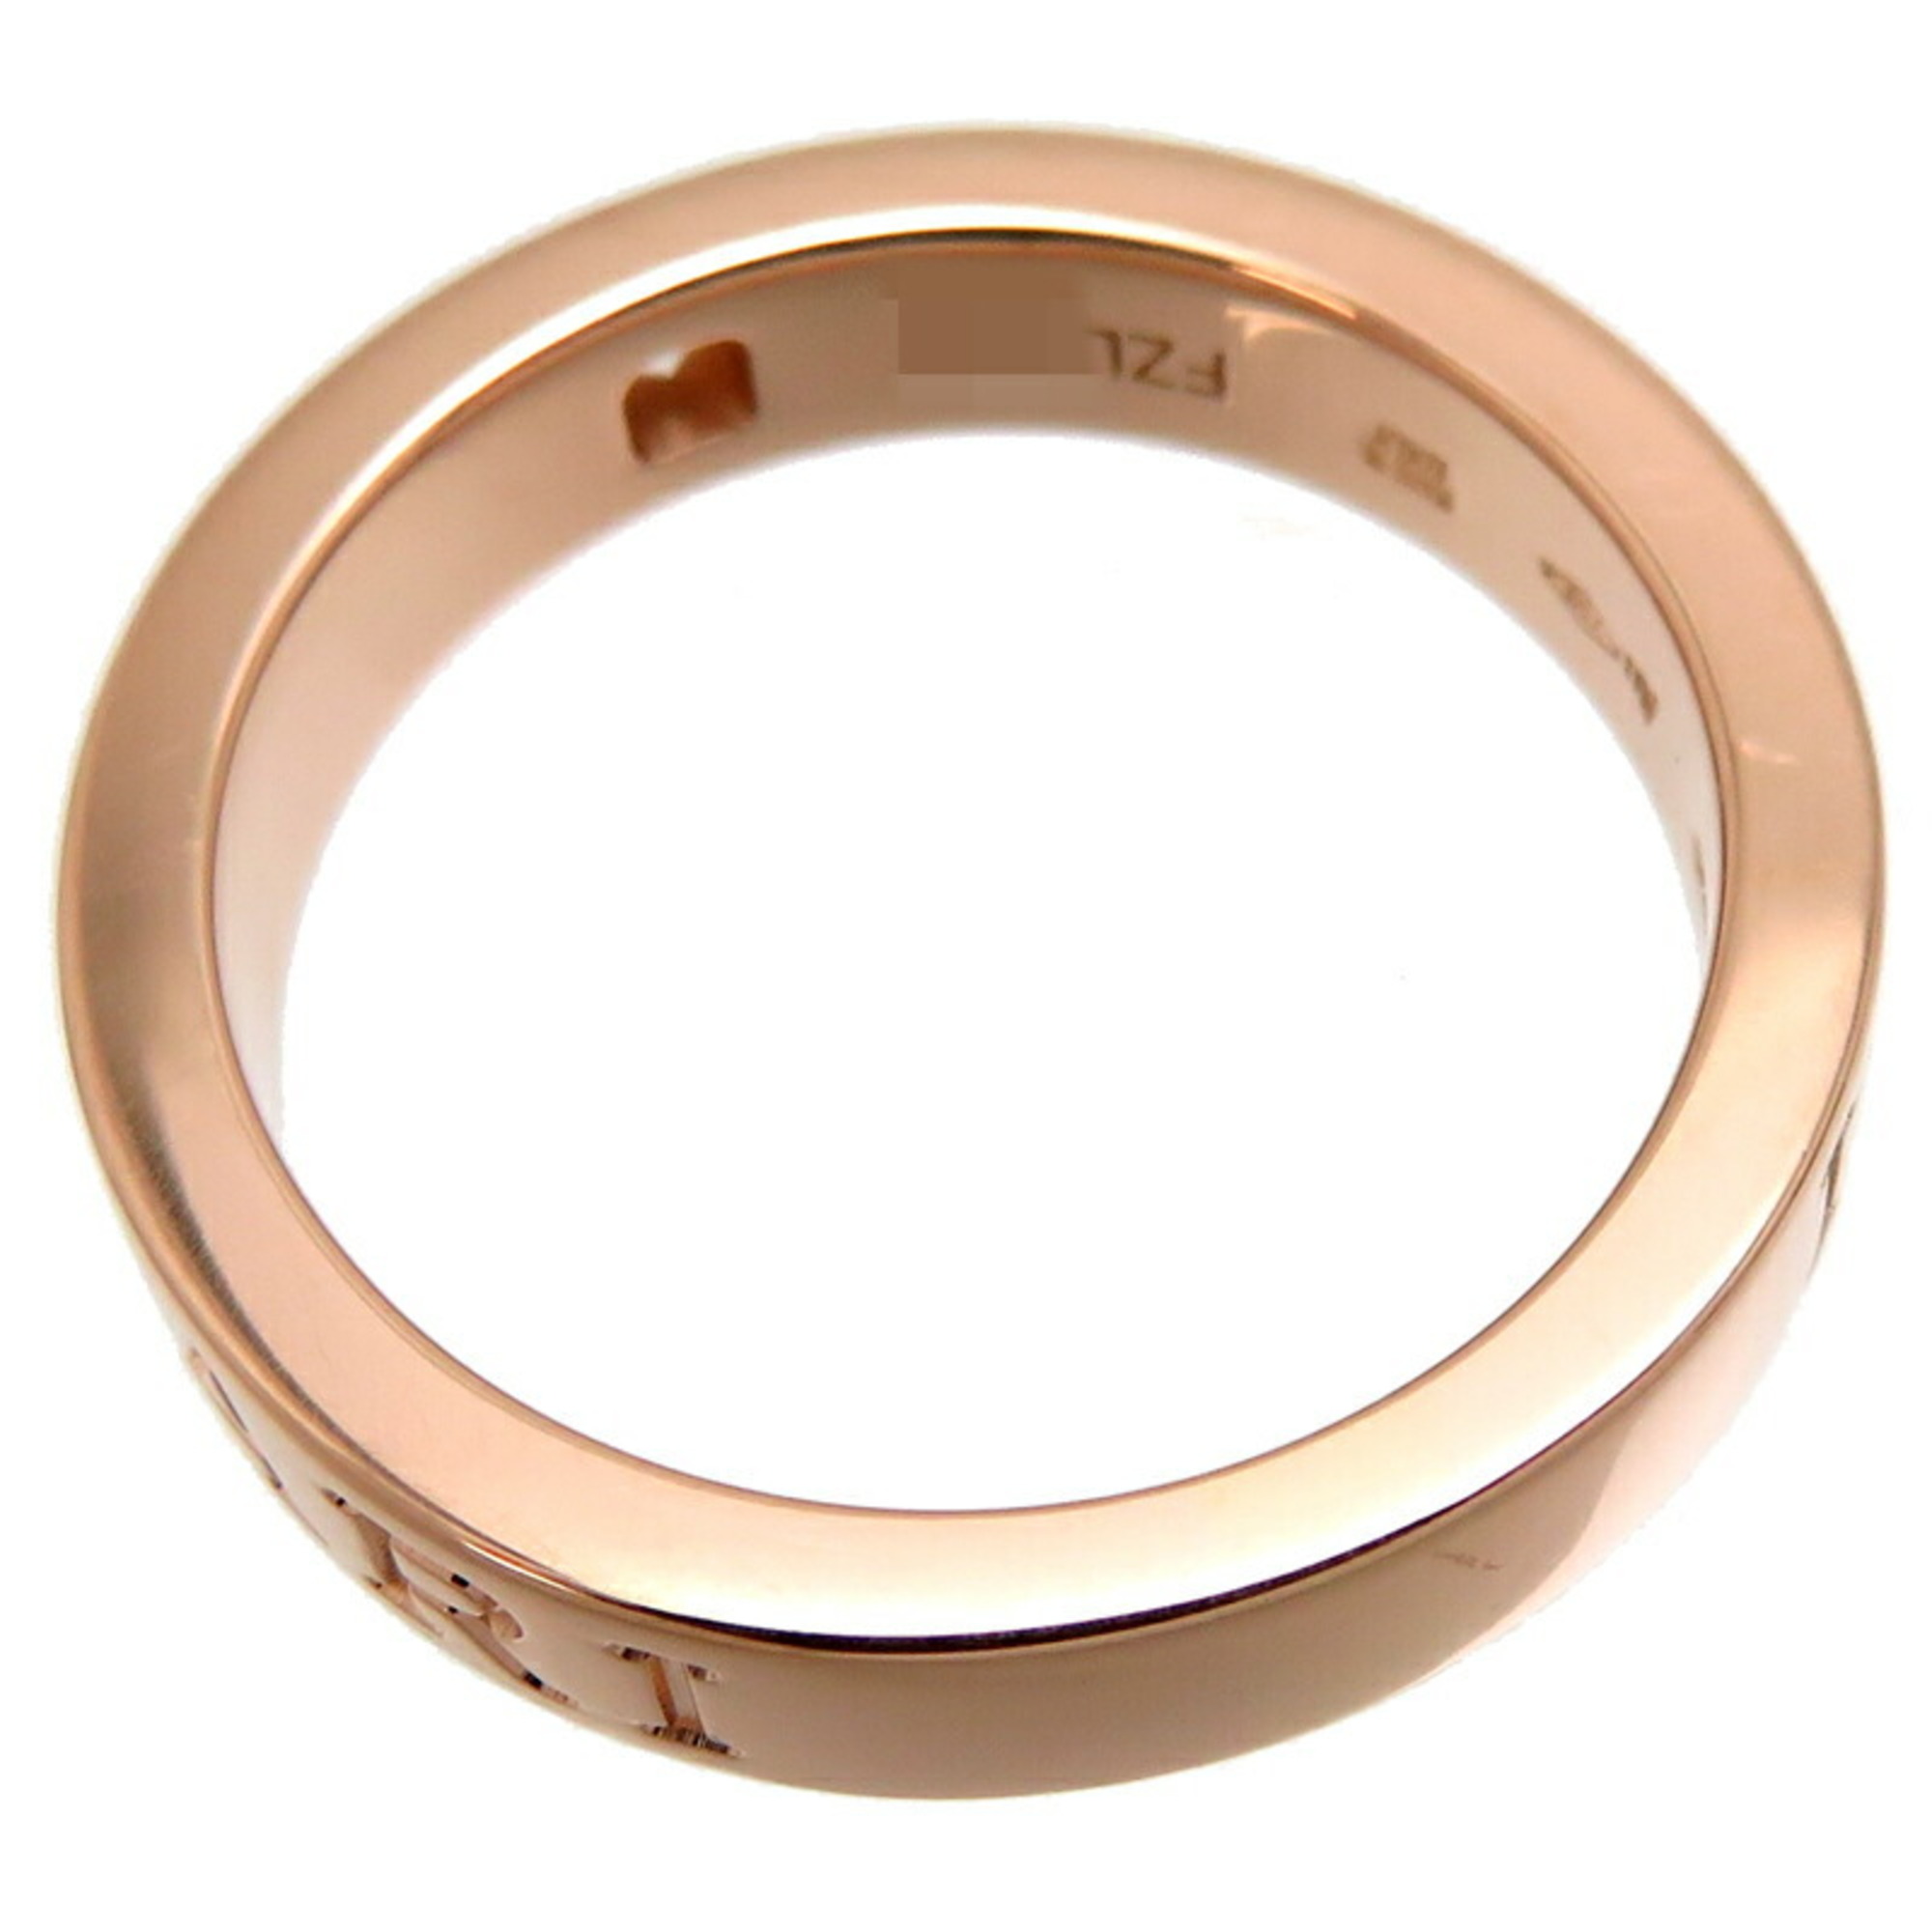 Bvlgari Diamond Double Women's Ring, 750 Pink Gold, Size 12